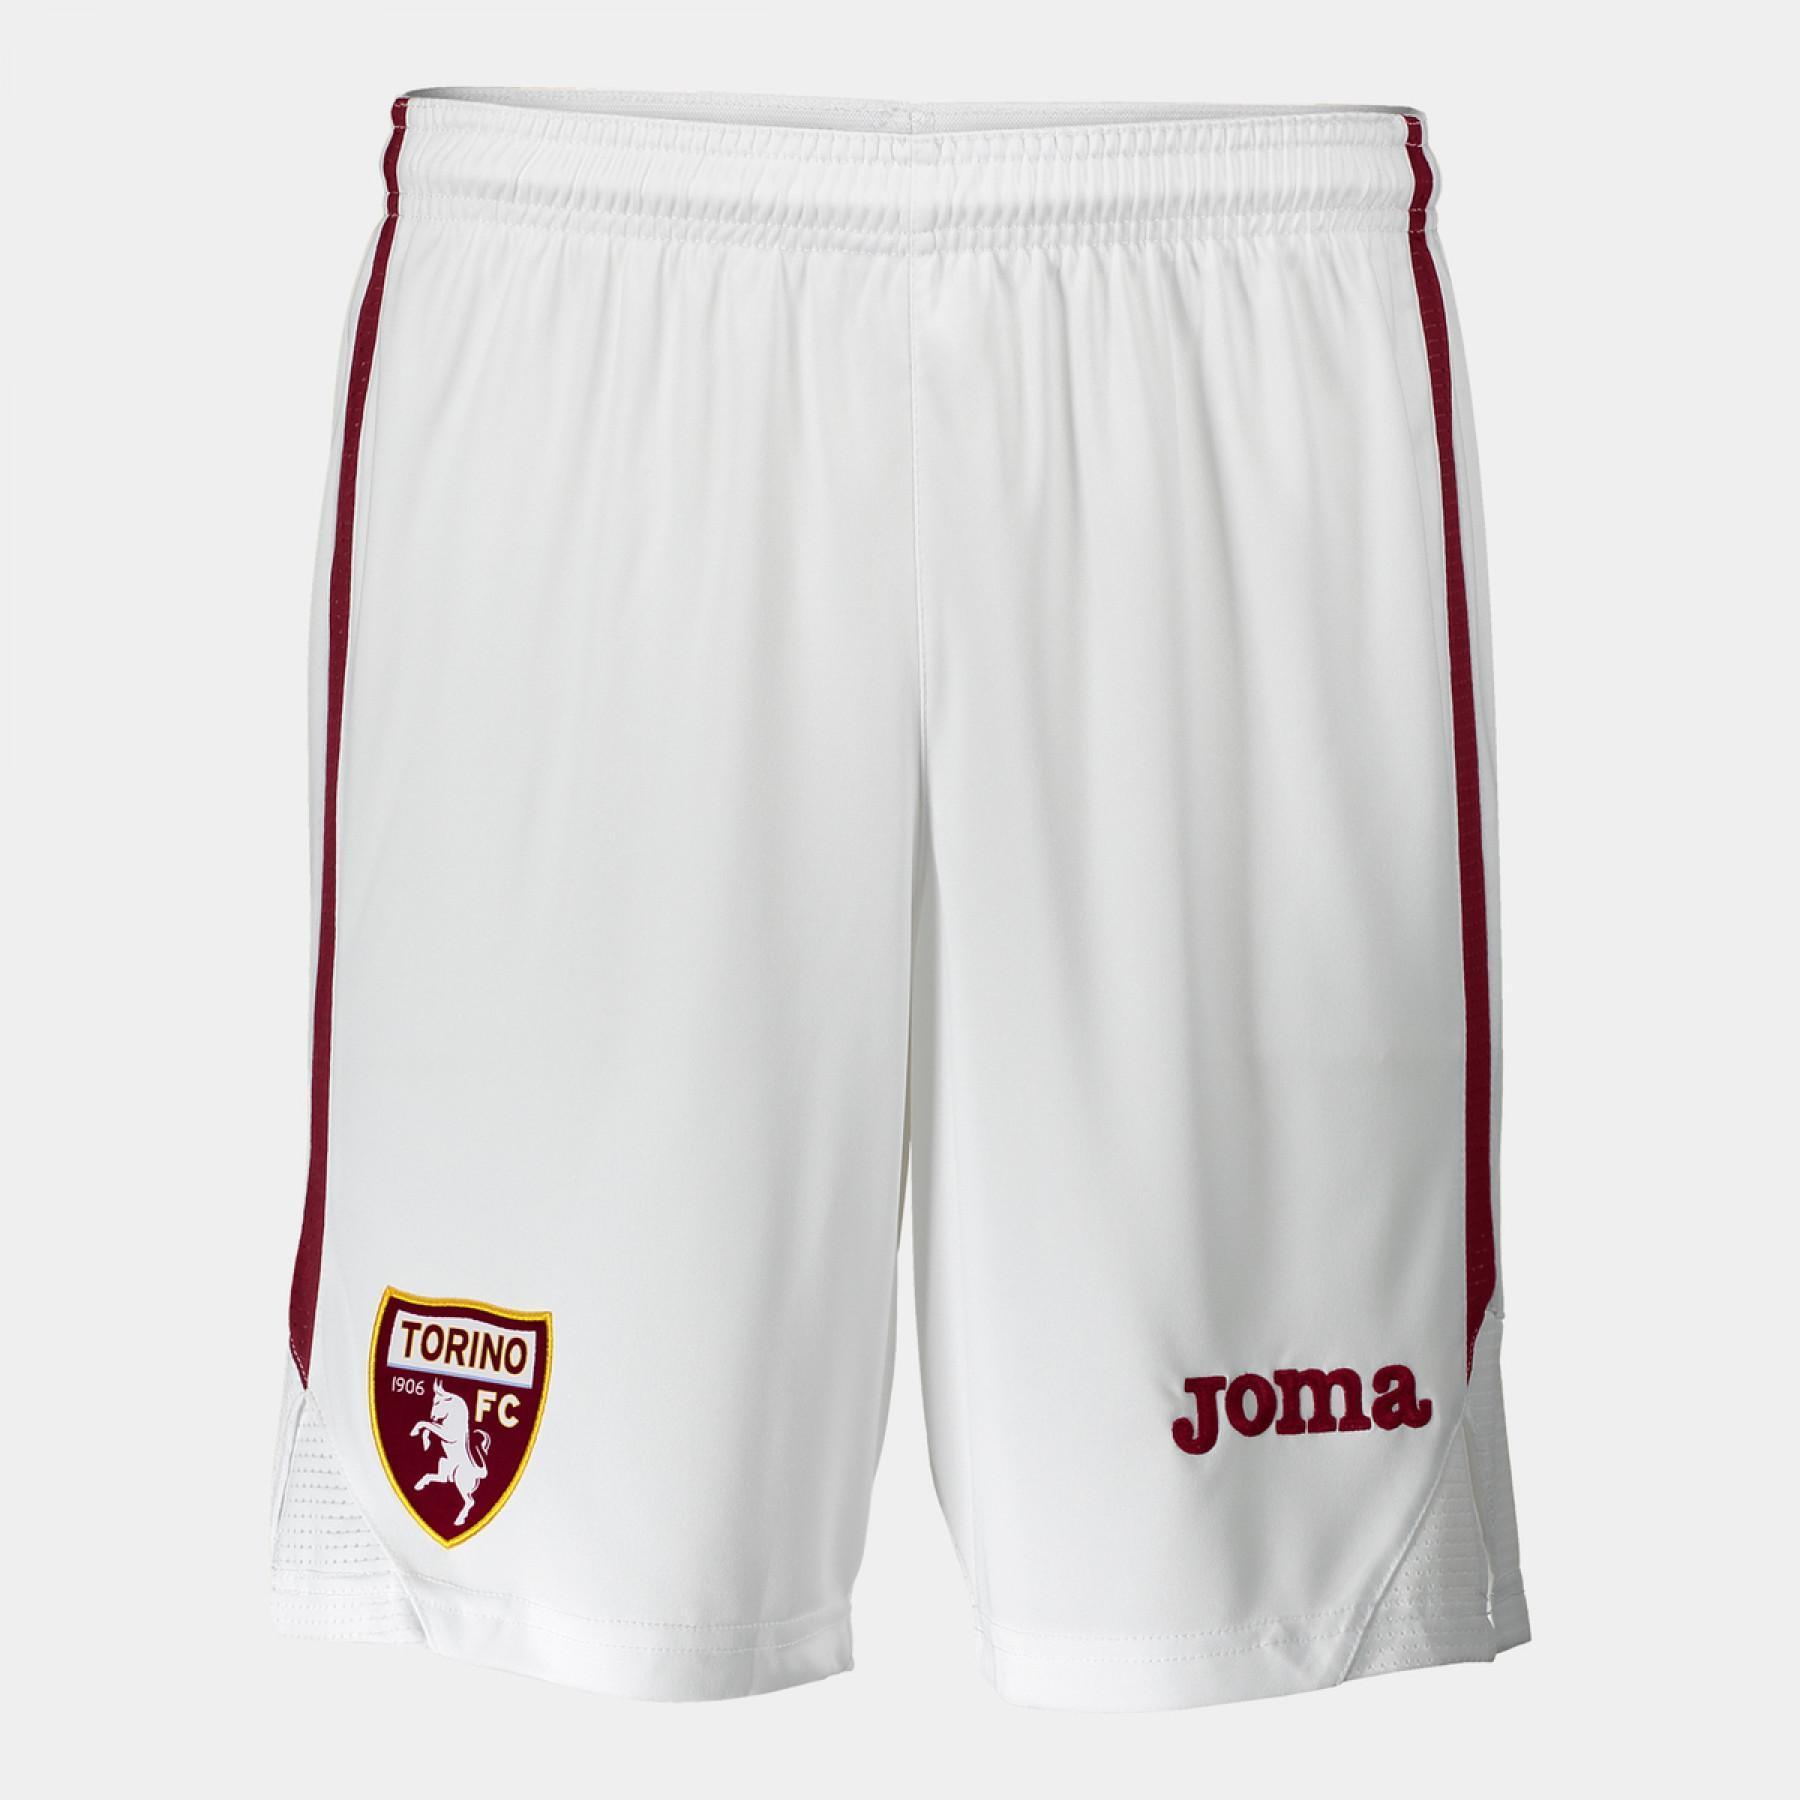 Outdoor-Shorts Torino FC 2020/21